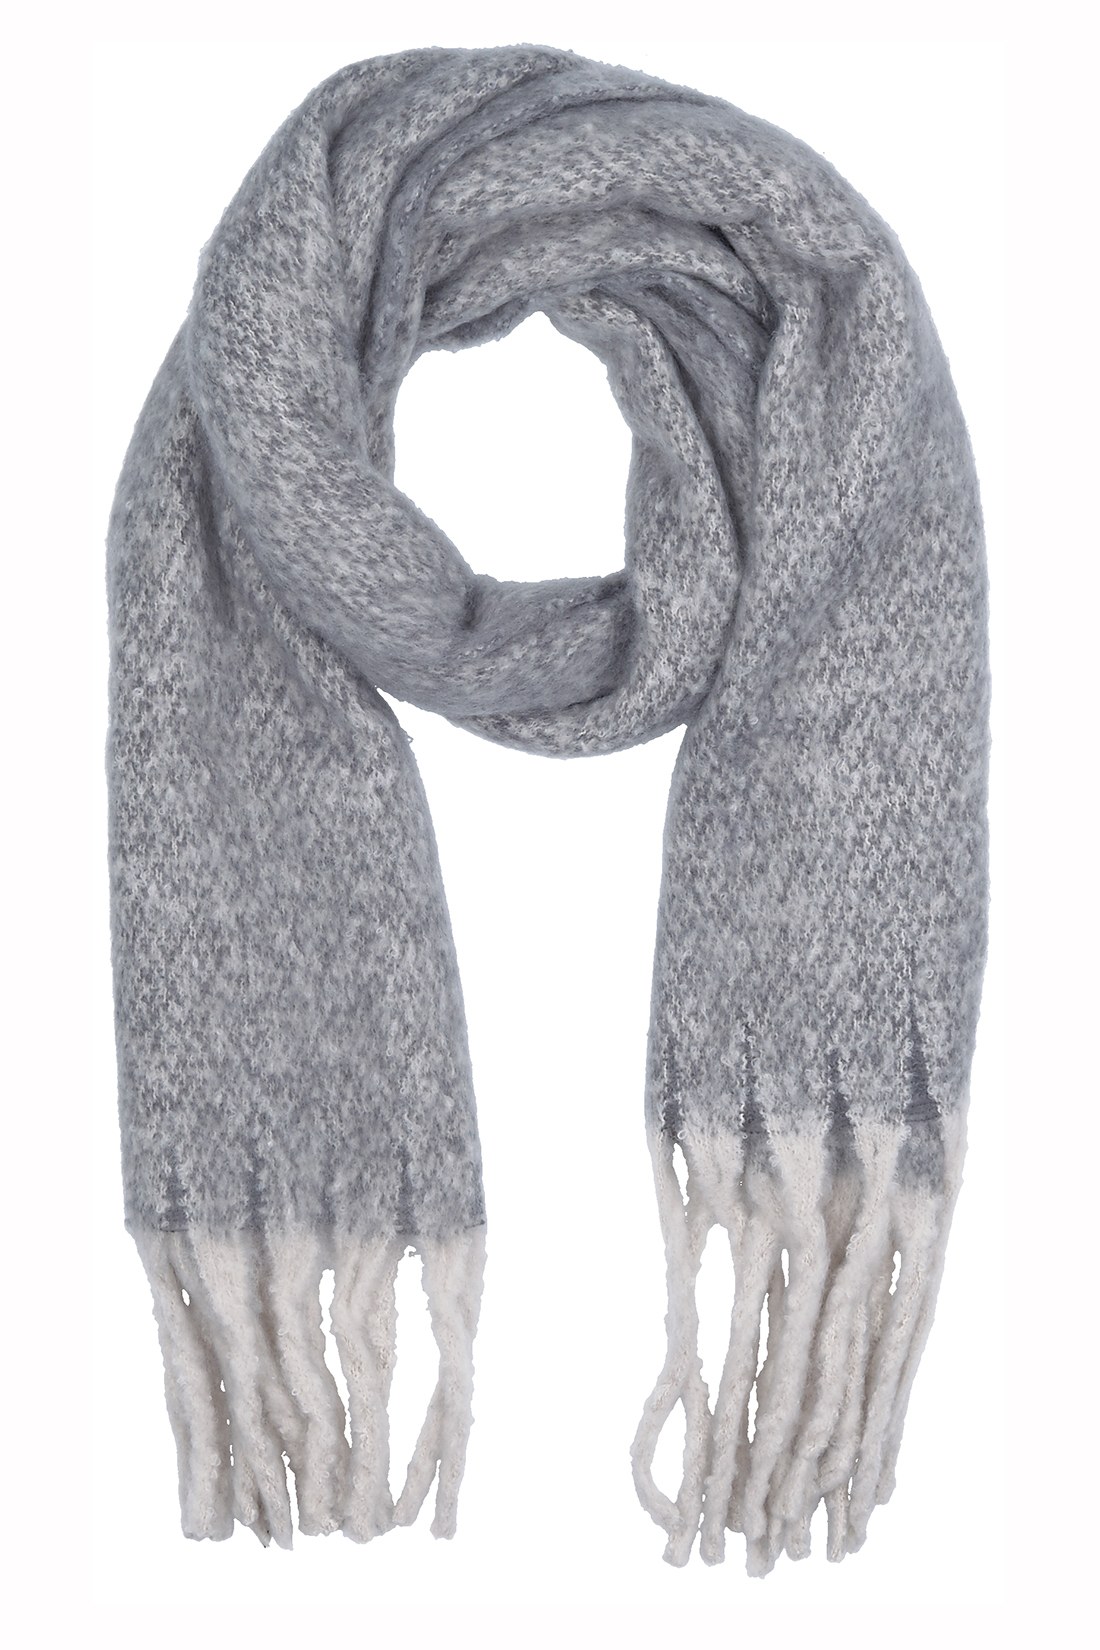 Шерстяной шарф с бахромой (арт. baon B358501), размер Без/раз, цвет серый Шерстяной шарф с бахромой (арт. baon B358501) - фото 1